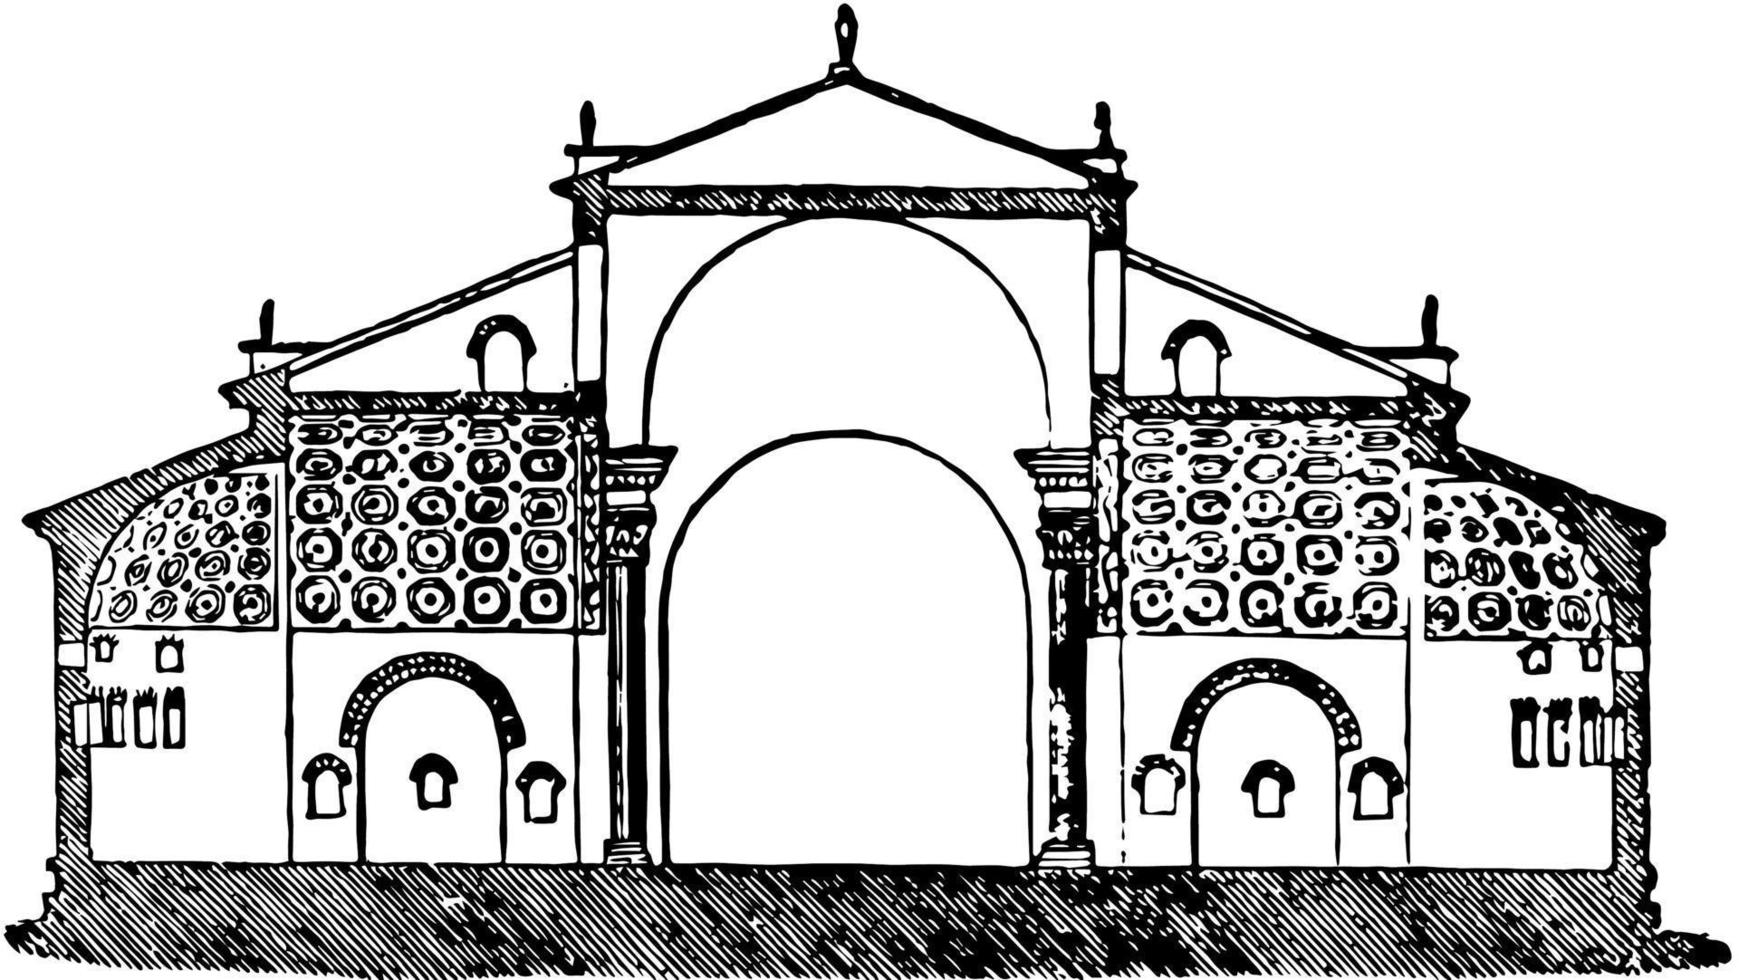 basílica de maxentius, grandes bóvedas que se cruzan, grabado antiguo. vector